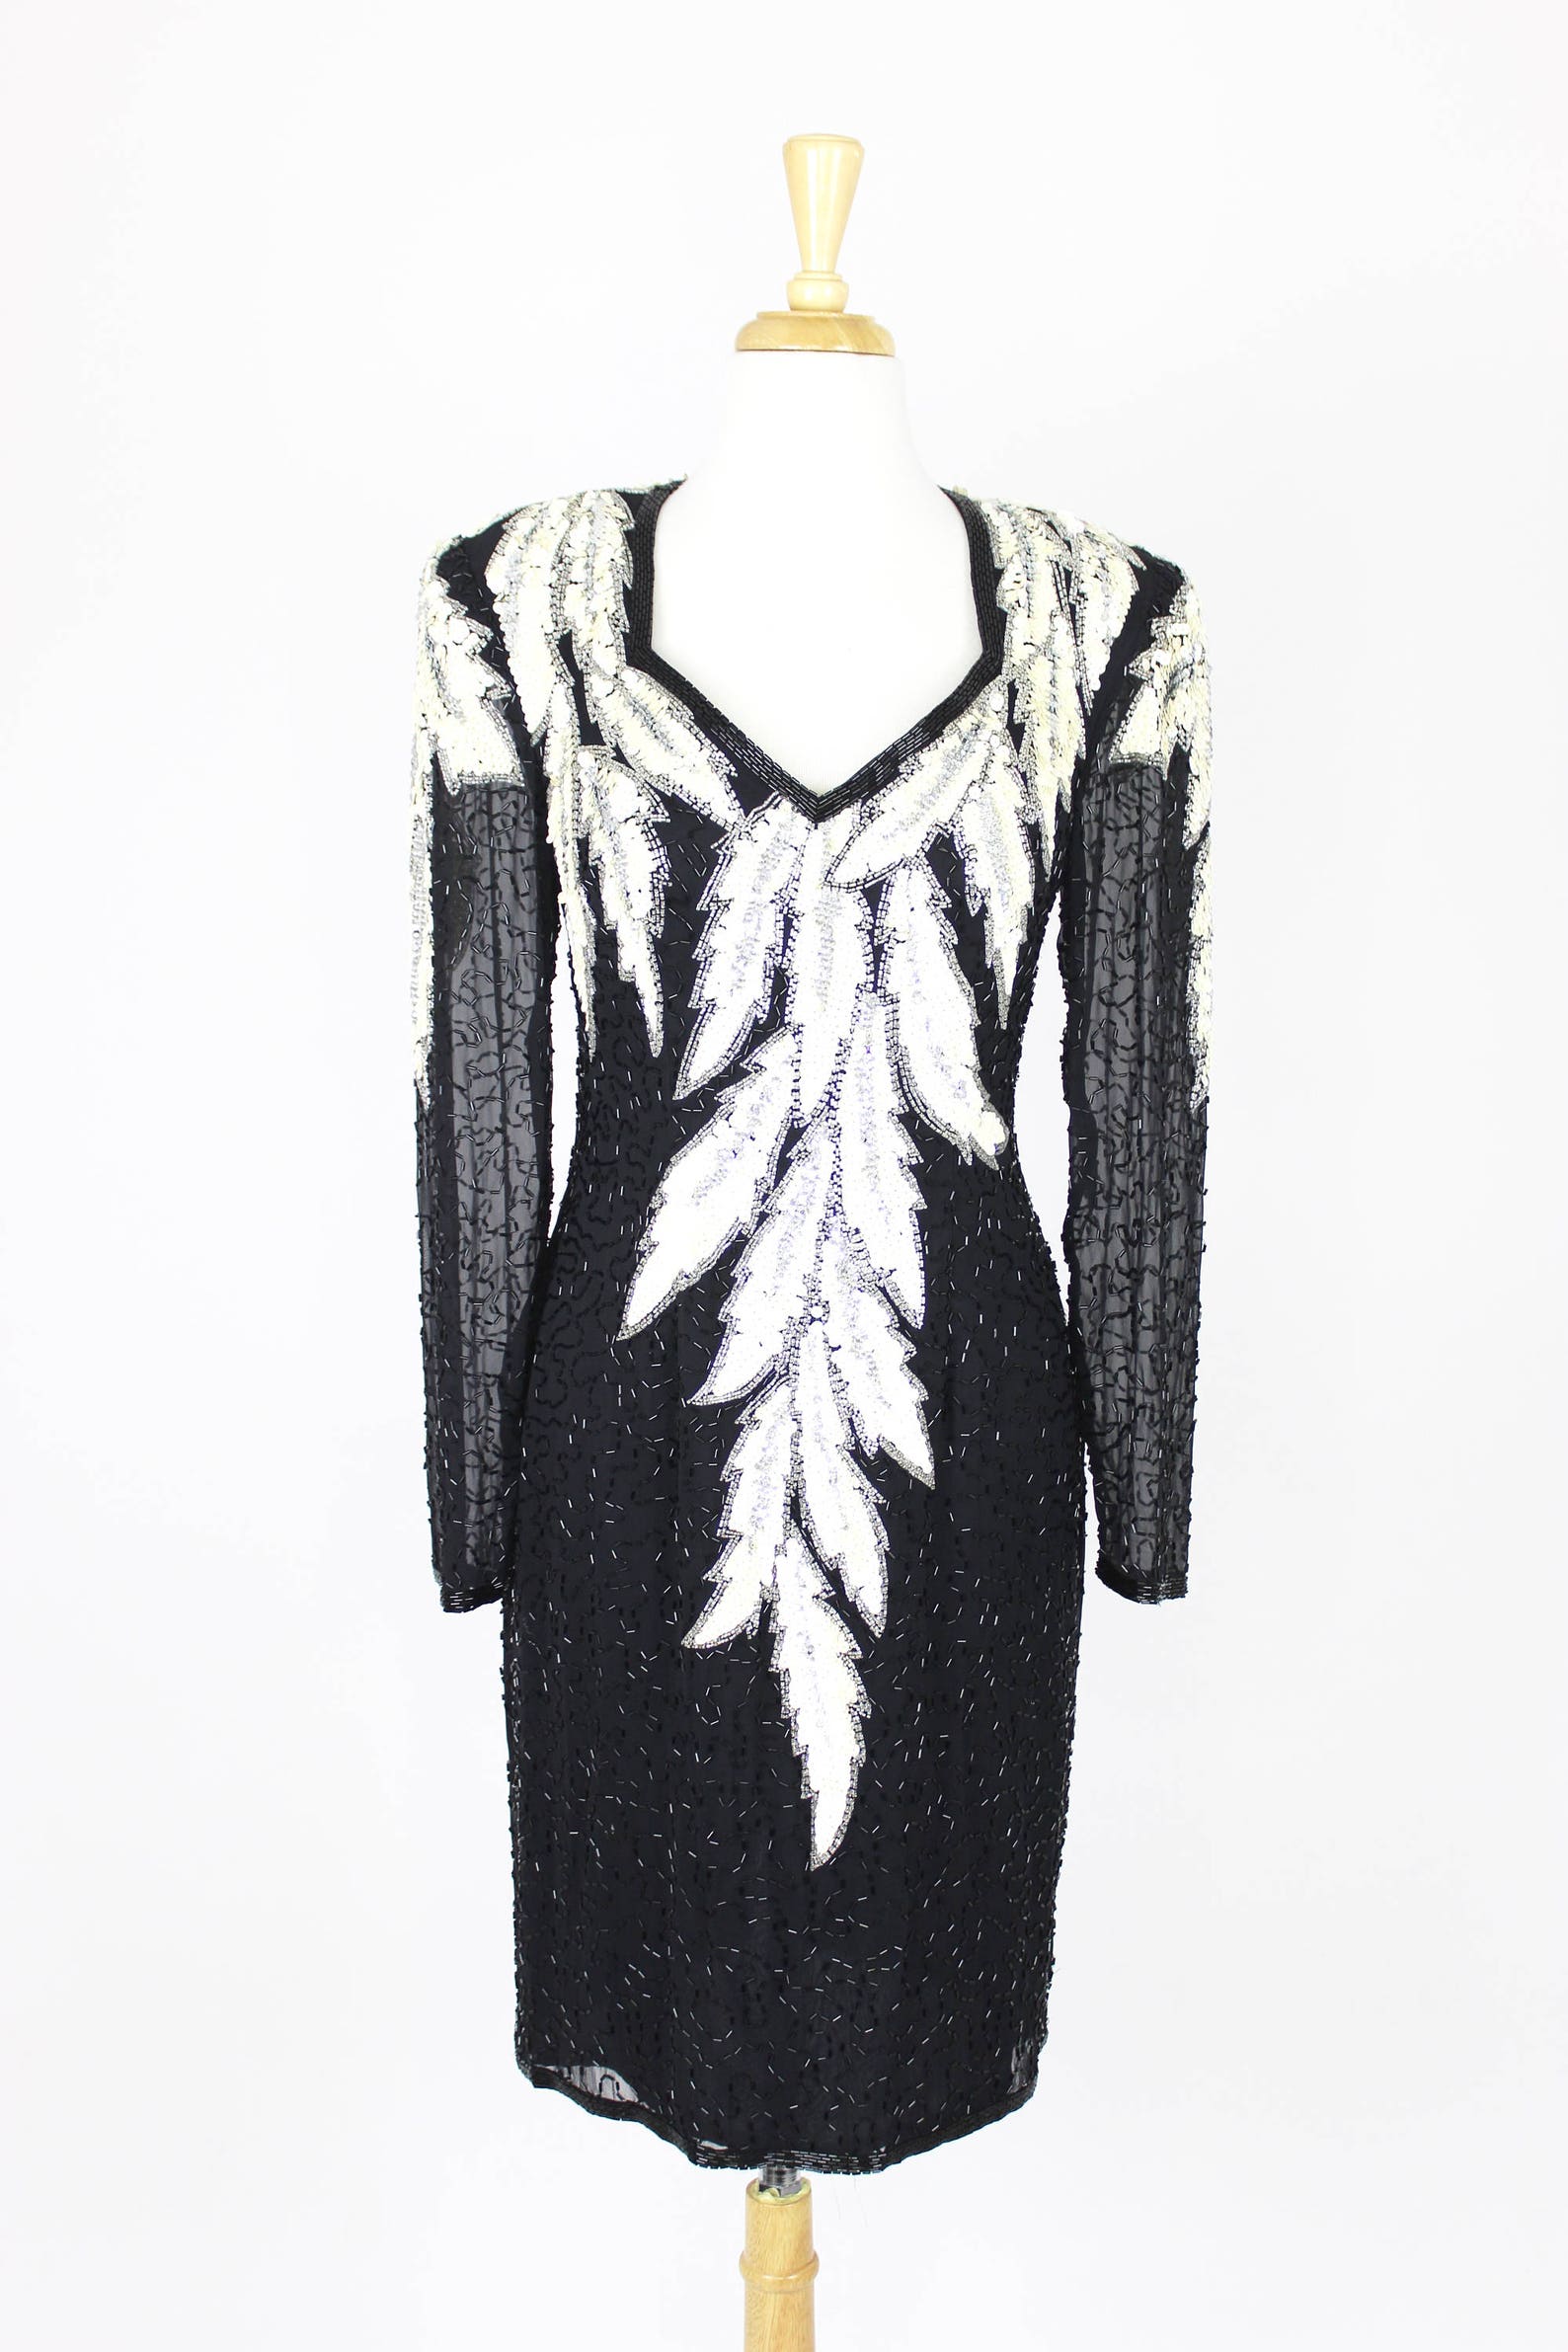 Vintage Sequin Dress Lillie Rubin Size Large Black White 80s - Etsy